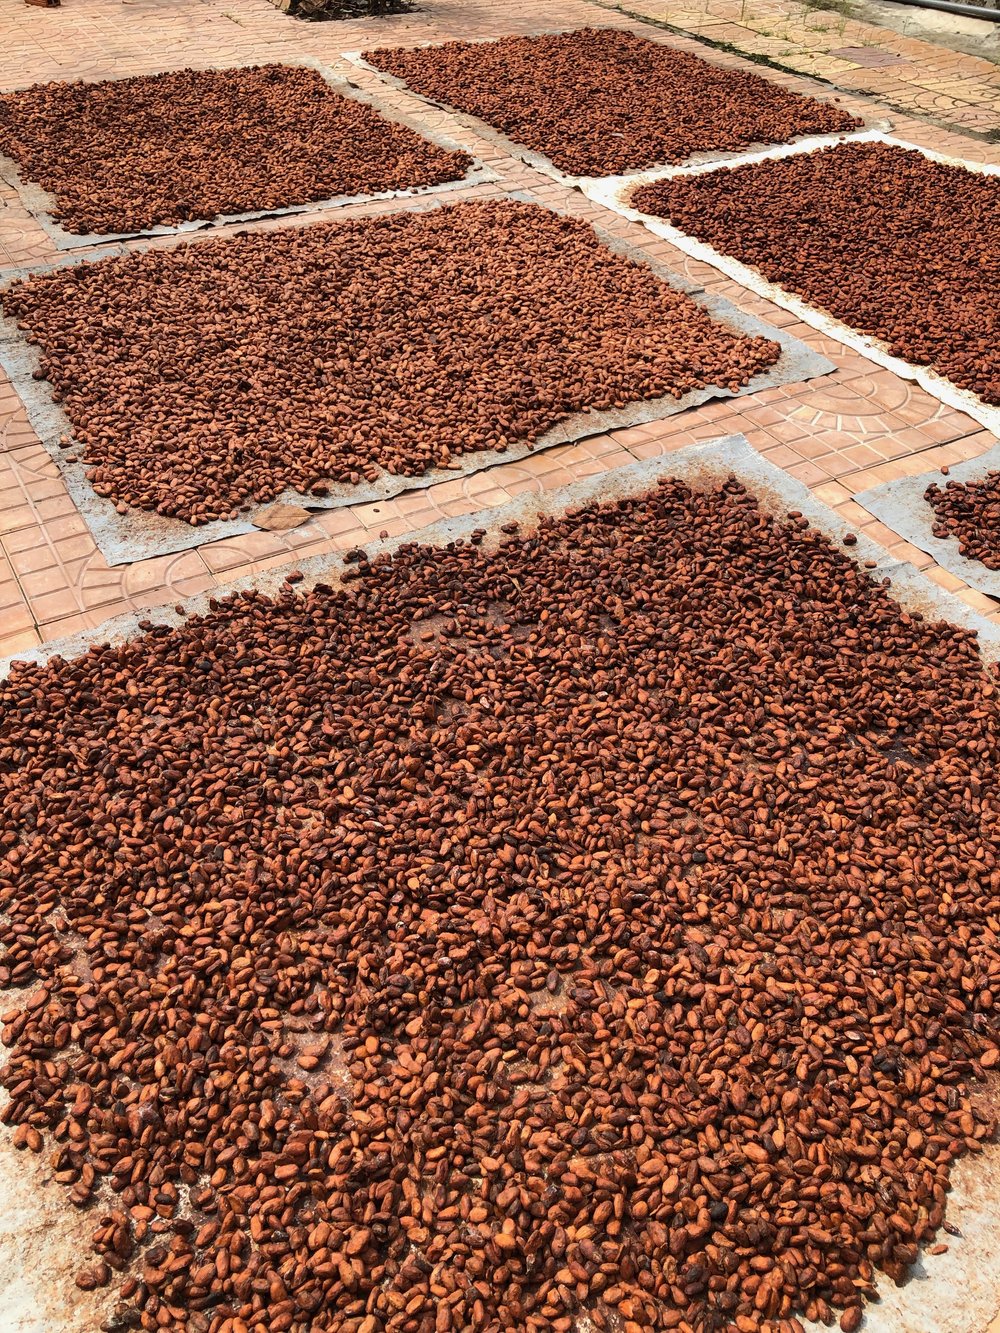  Cacao farm 